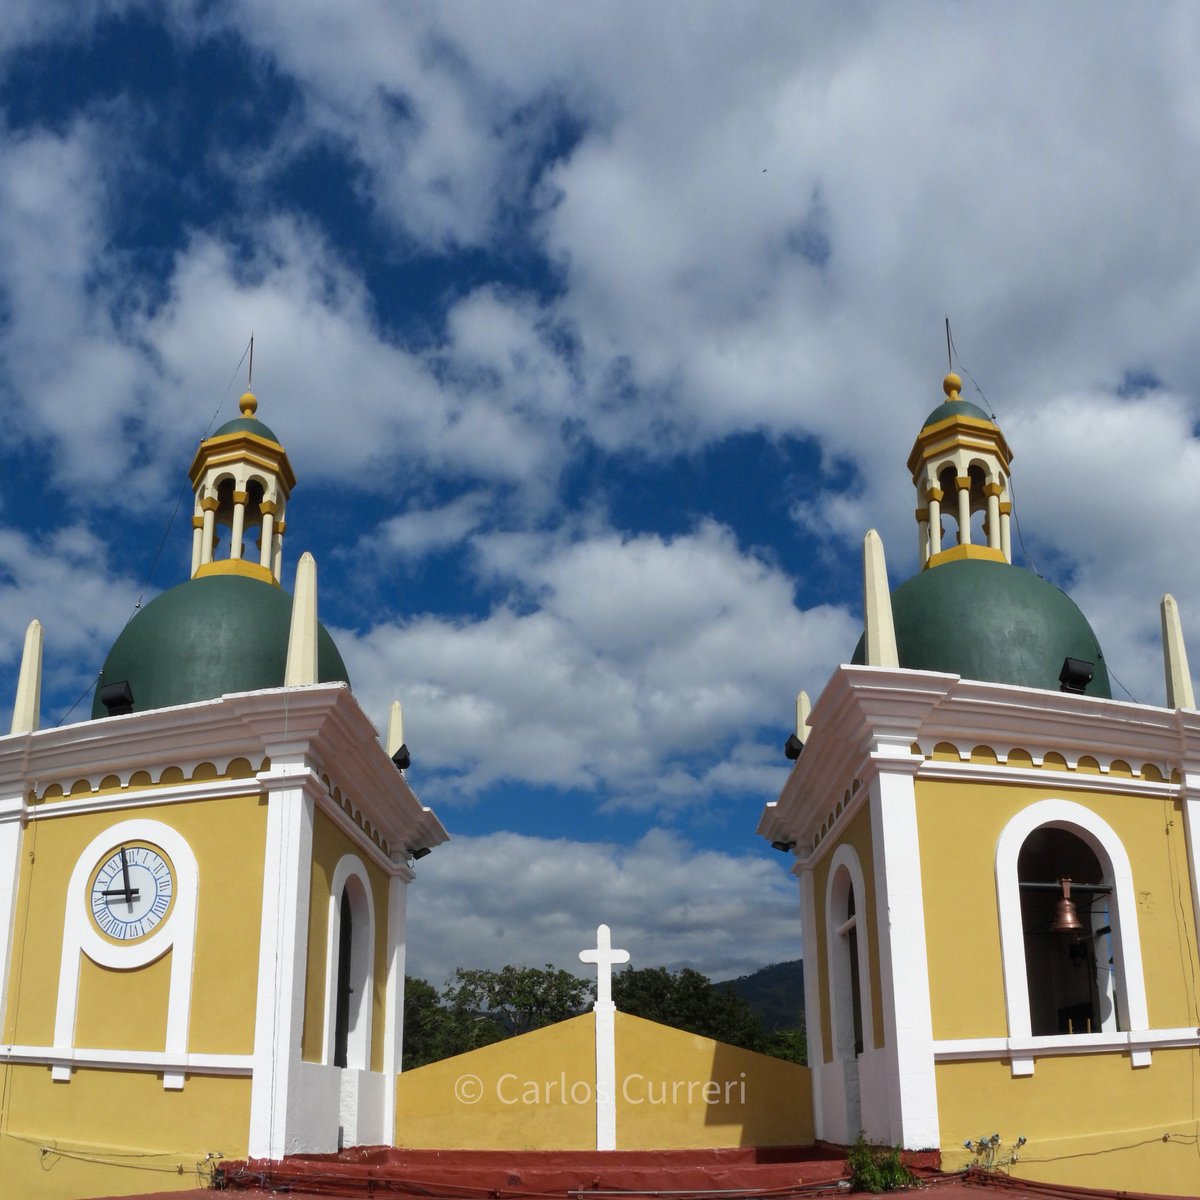 Nuestra Señora de Begoña #Naguanagua #valencia #carabobo #venezuela #photo #historia #arquitectura #architecture #PictureOfTheDay